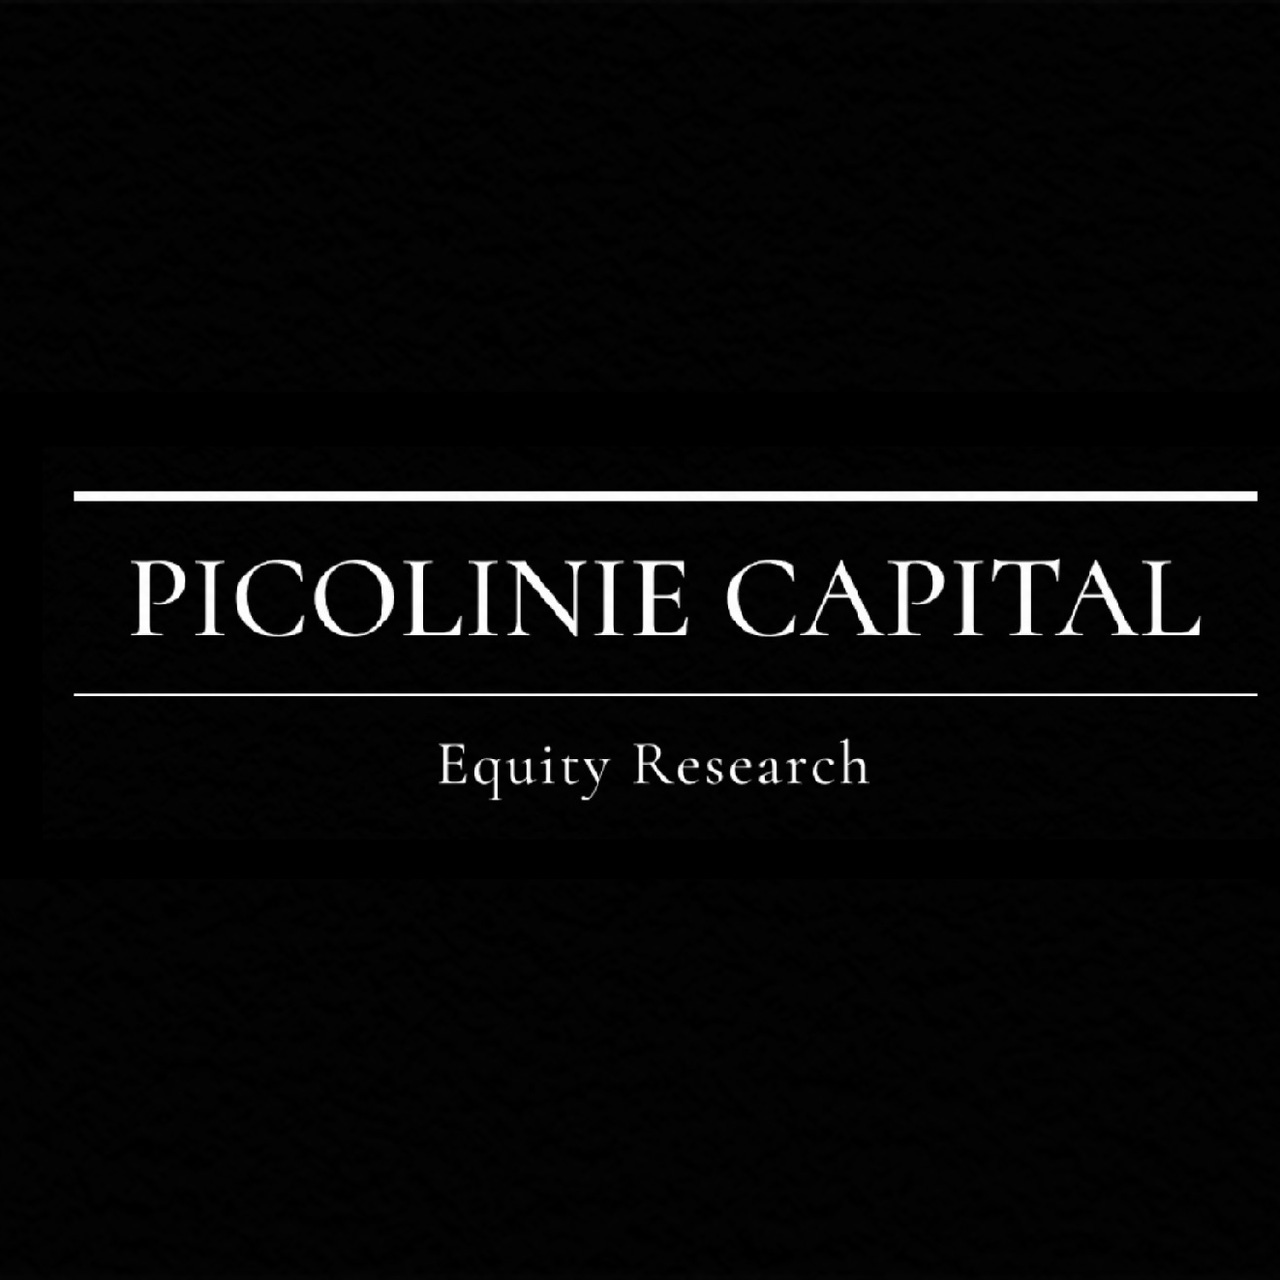 Picolinie Capital